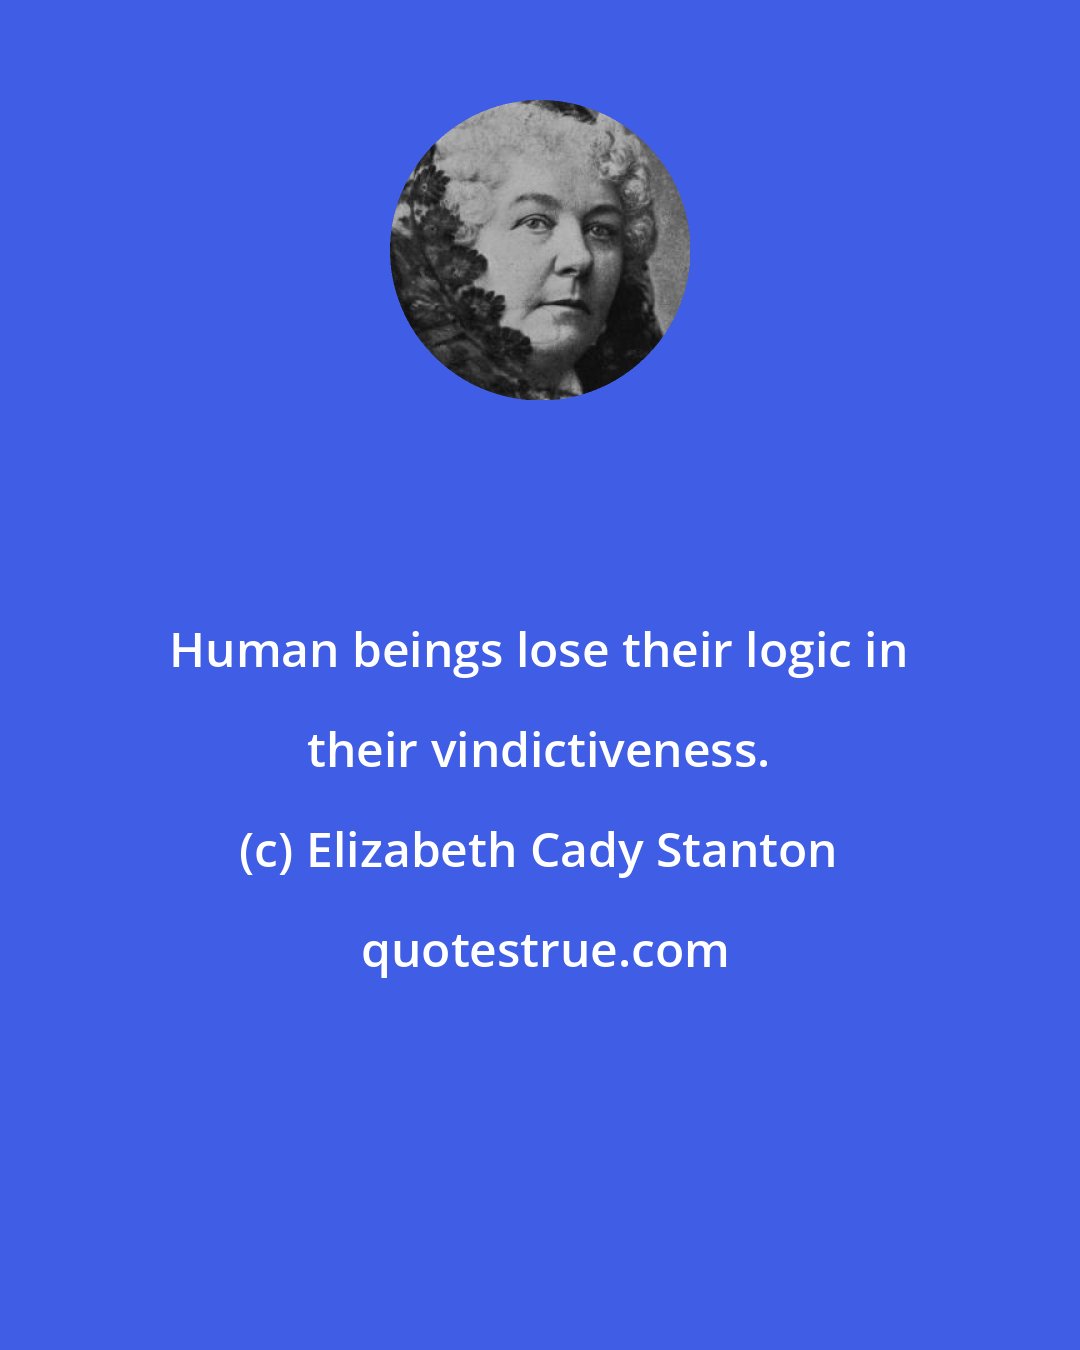 Elizabeth Cady Stanton: Human beings lose their logic in their vindictiveness.